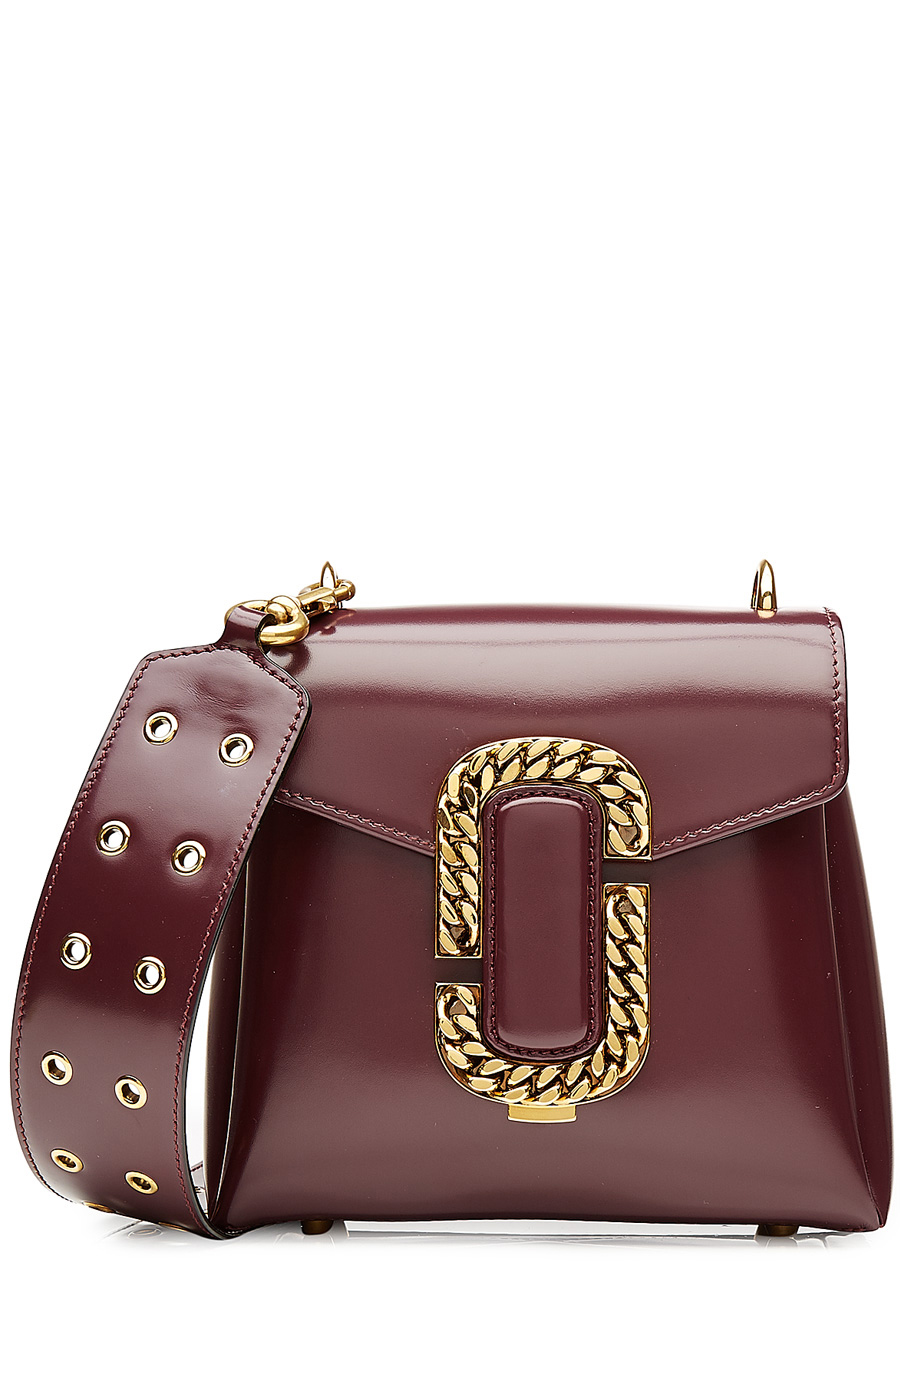 Marc Jacobs Patent Leather Shoulder Bag | ModeSens